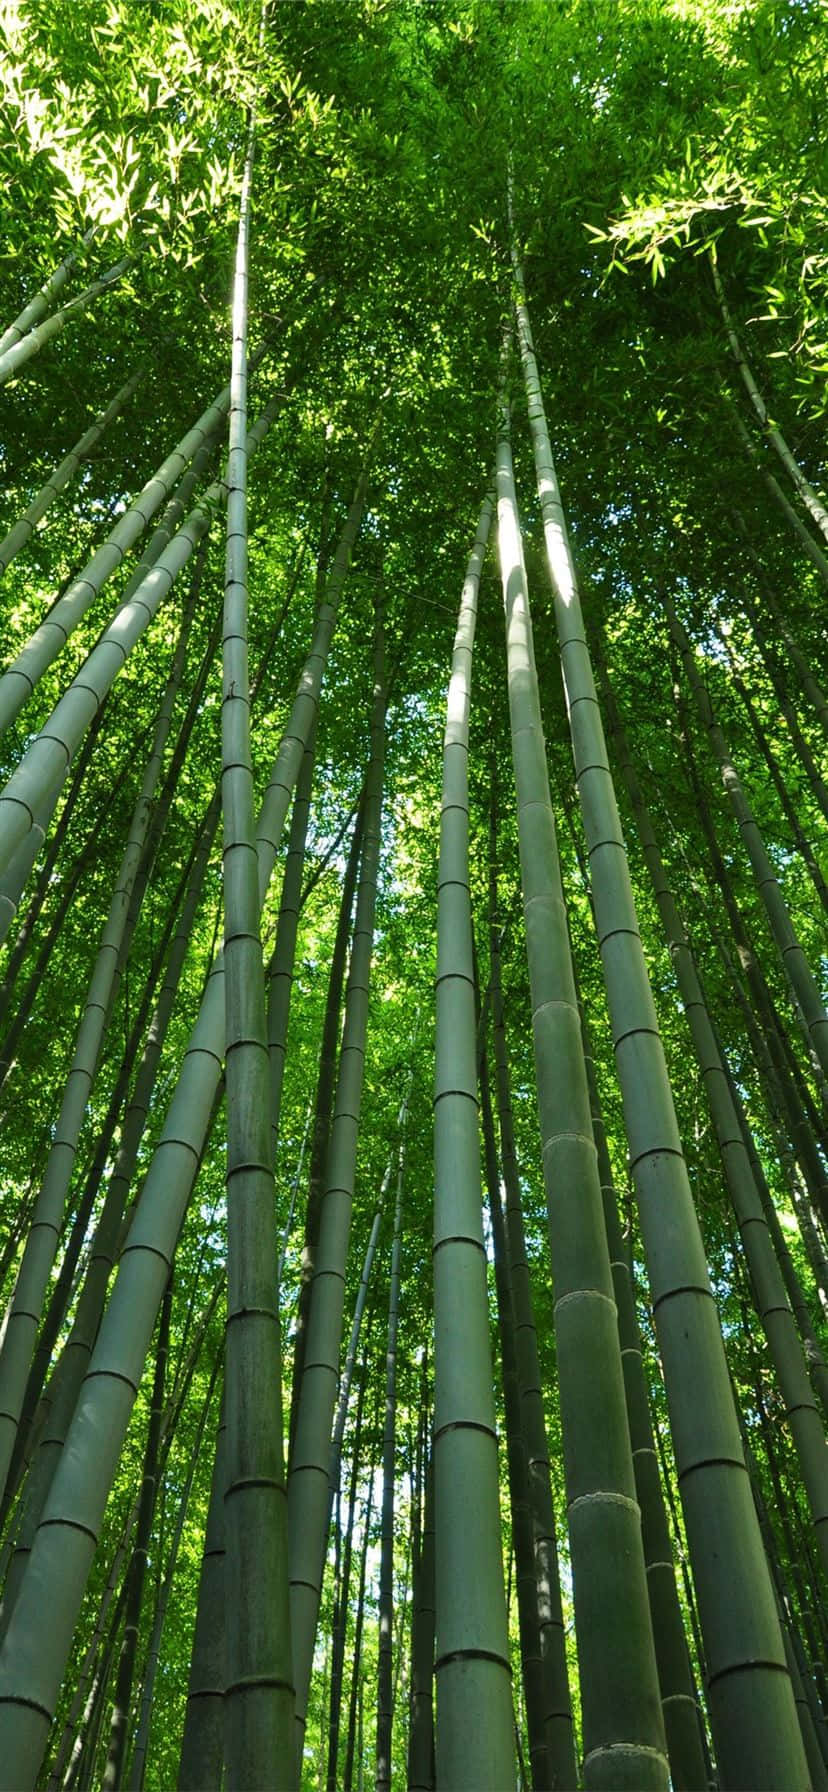 Bamboo Forest Wallpaper - Bamboo Forest Wallpaper Wallpaper